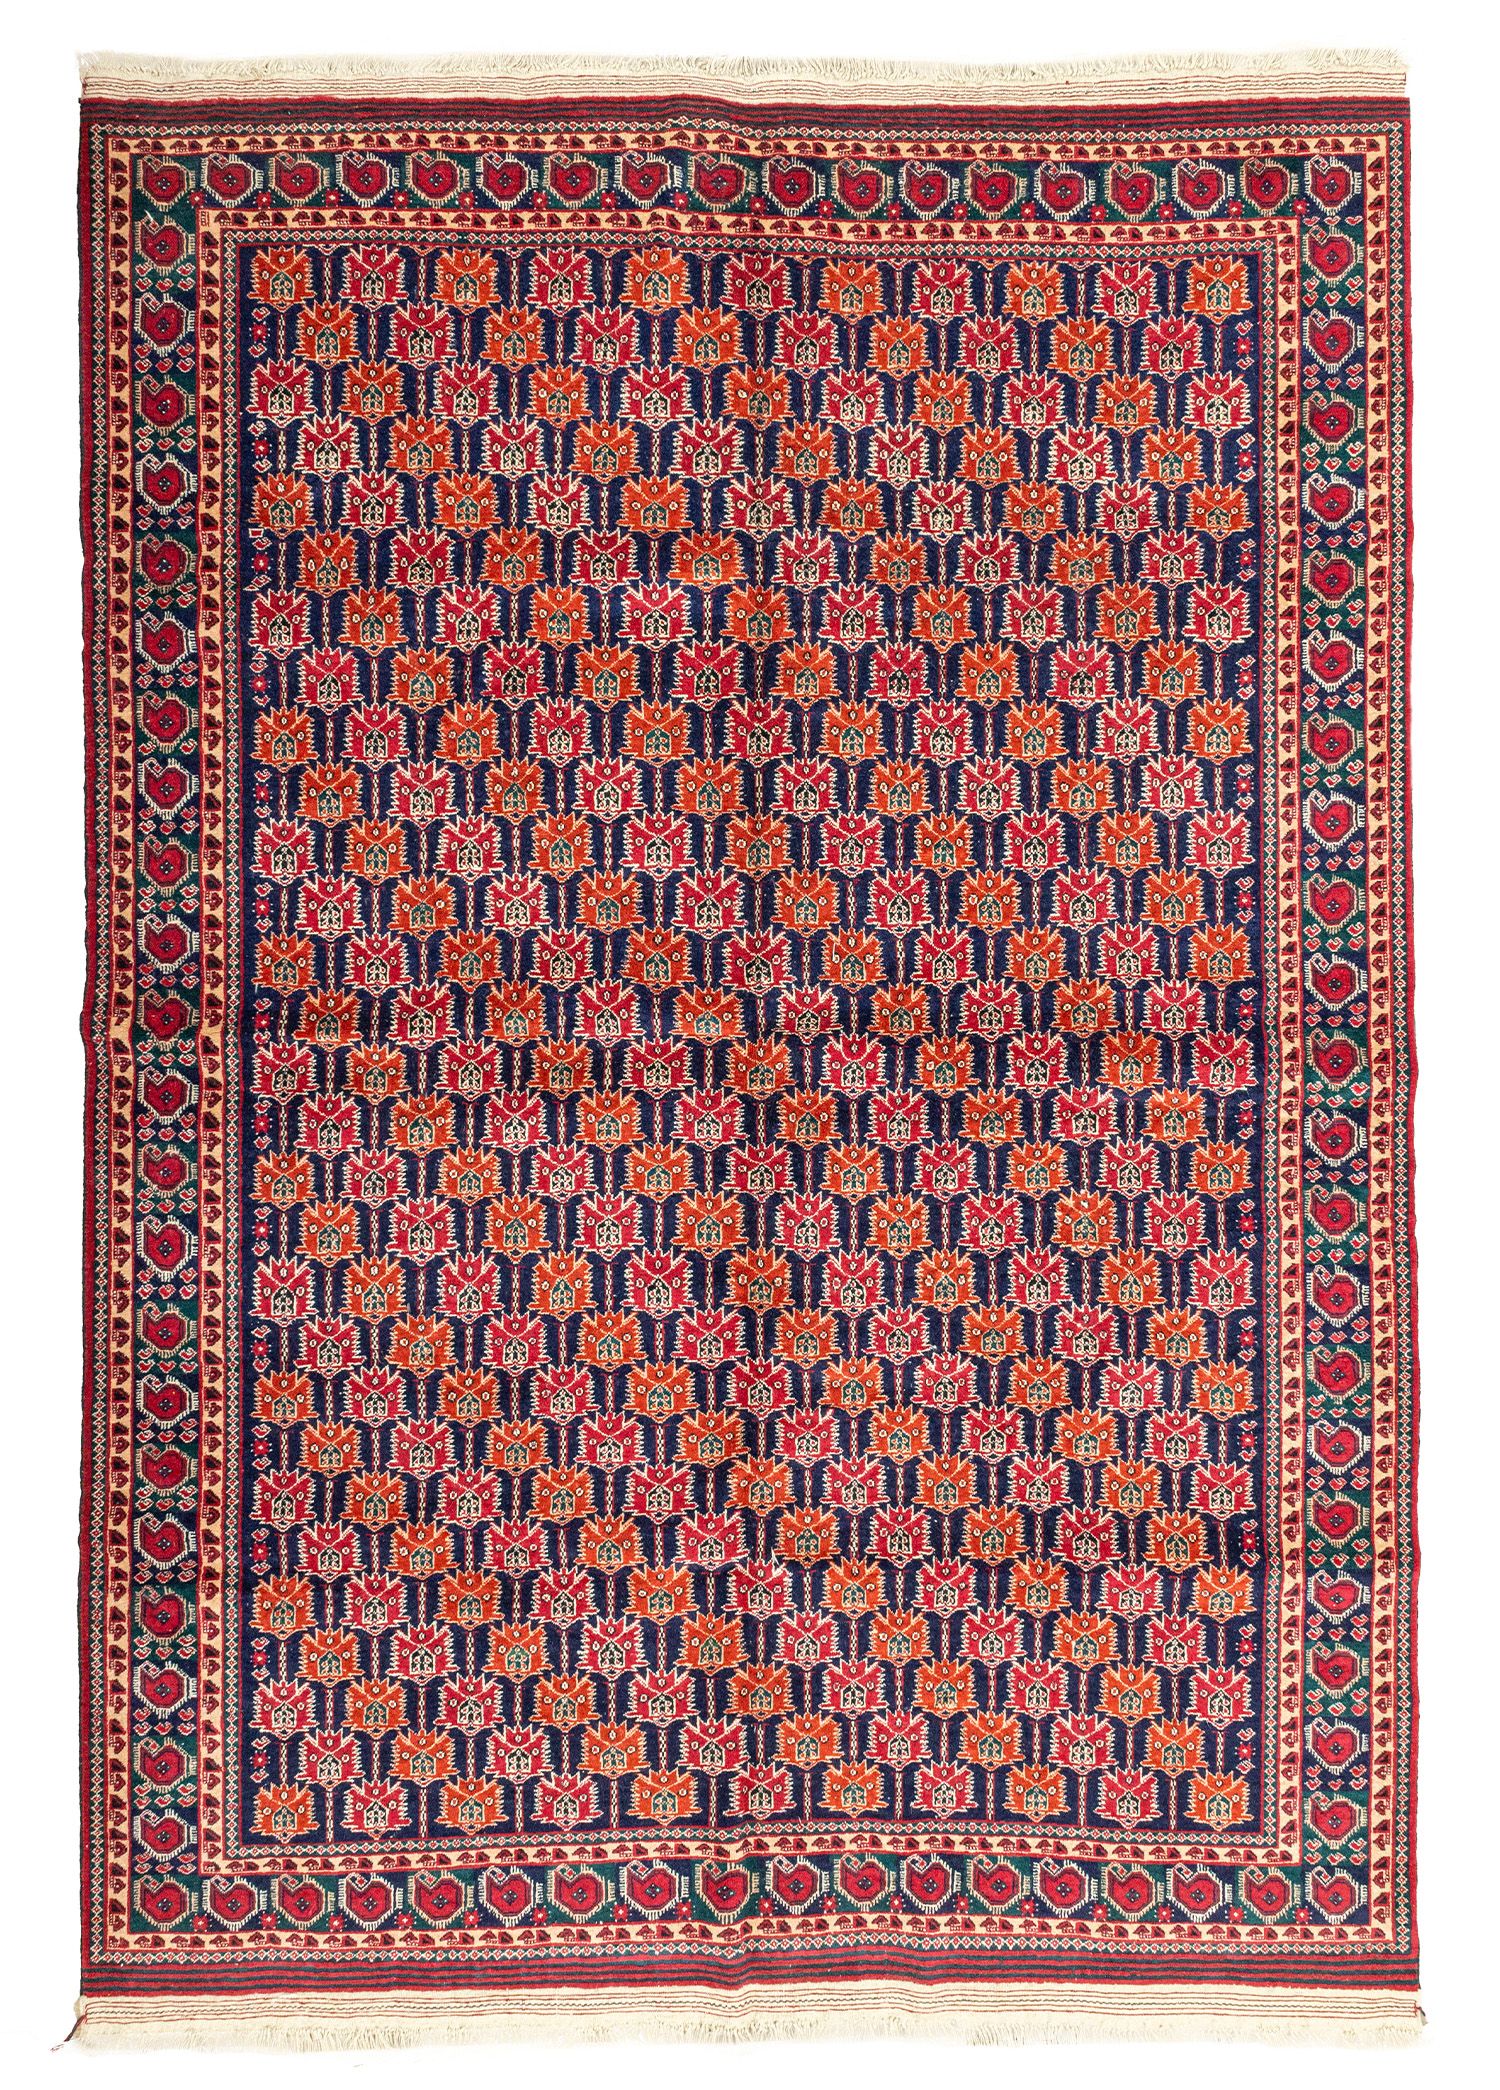 Mary Hand Woven Wool Turkmen Rug 196x282 cm